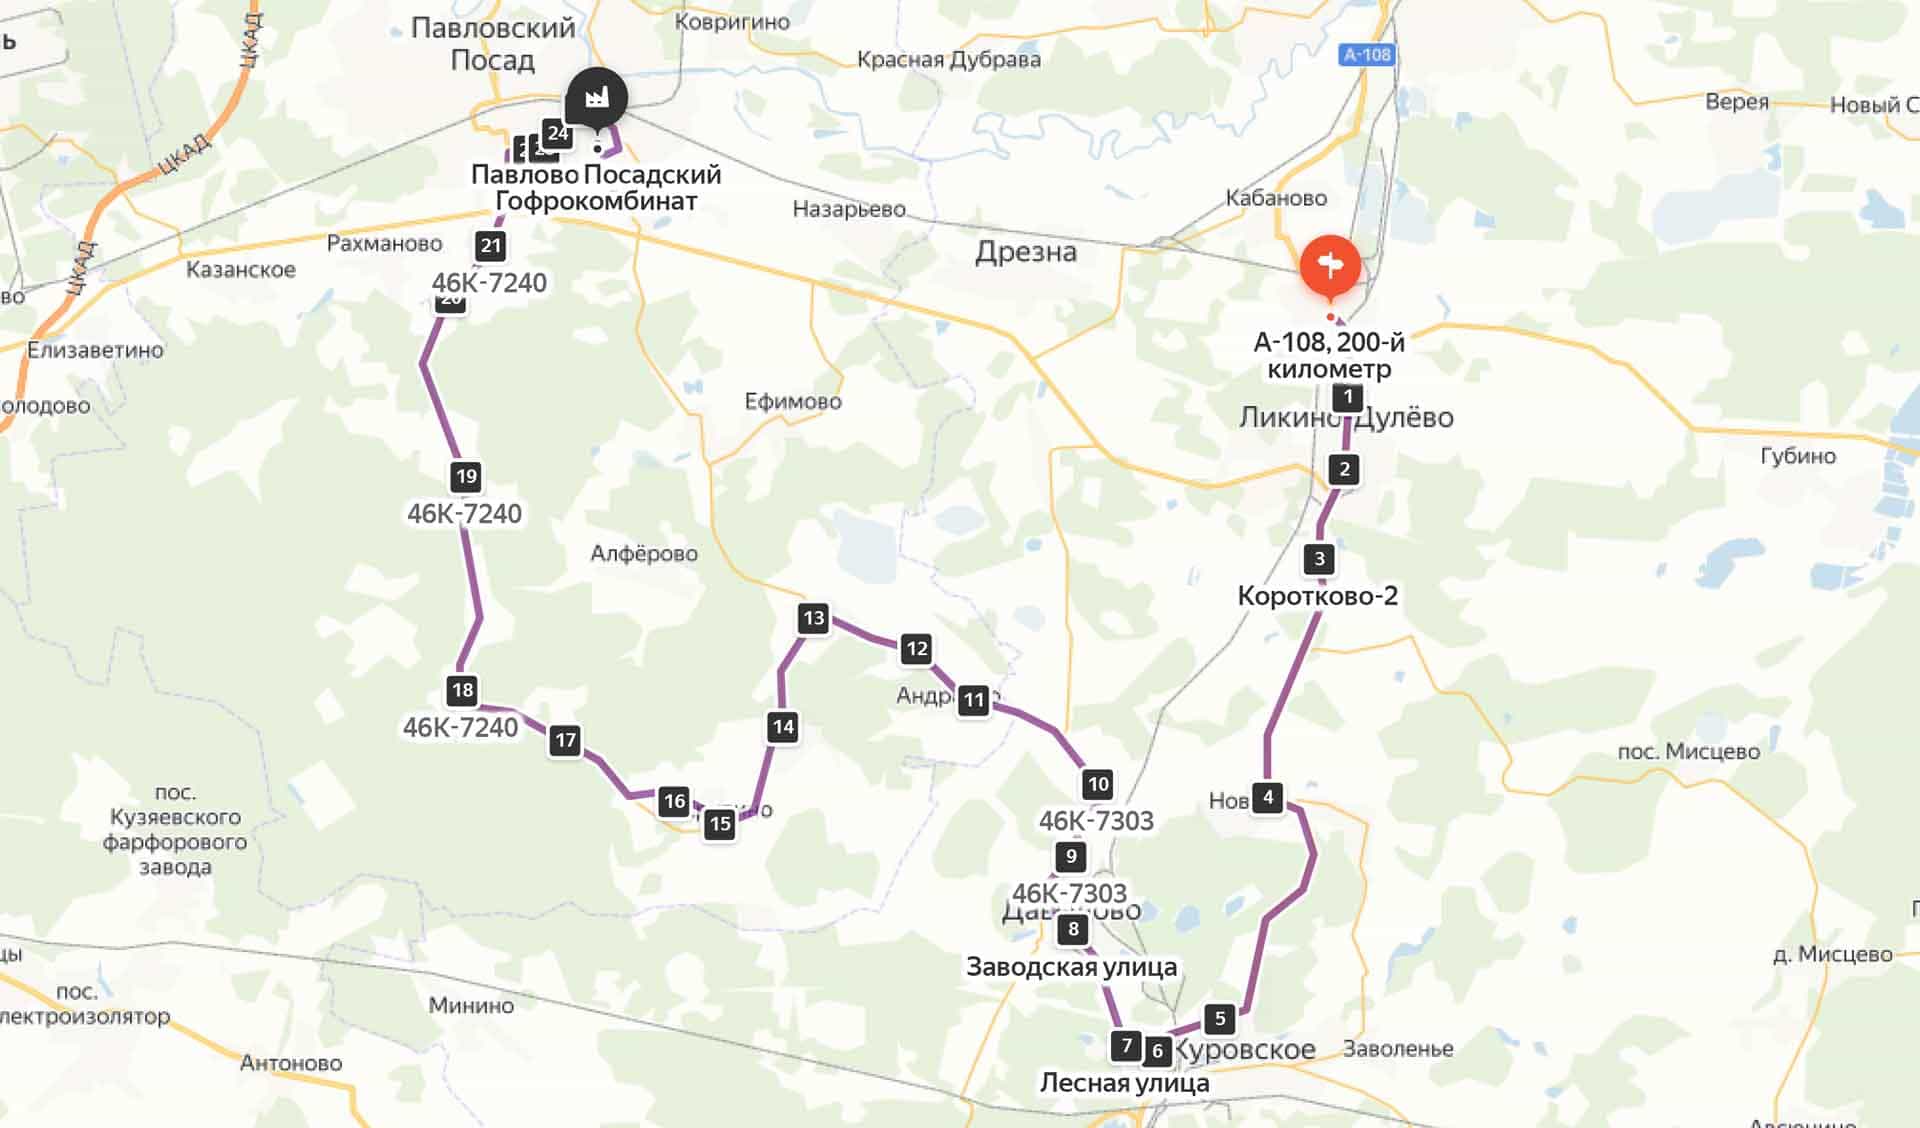 Схема проезда на Павлово-Посадский гофрокомбинат из Ликино-Дулёво